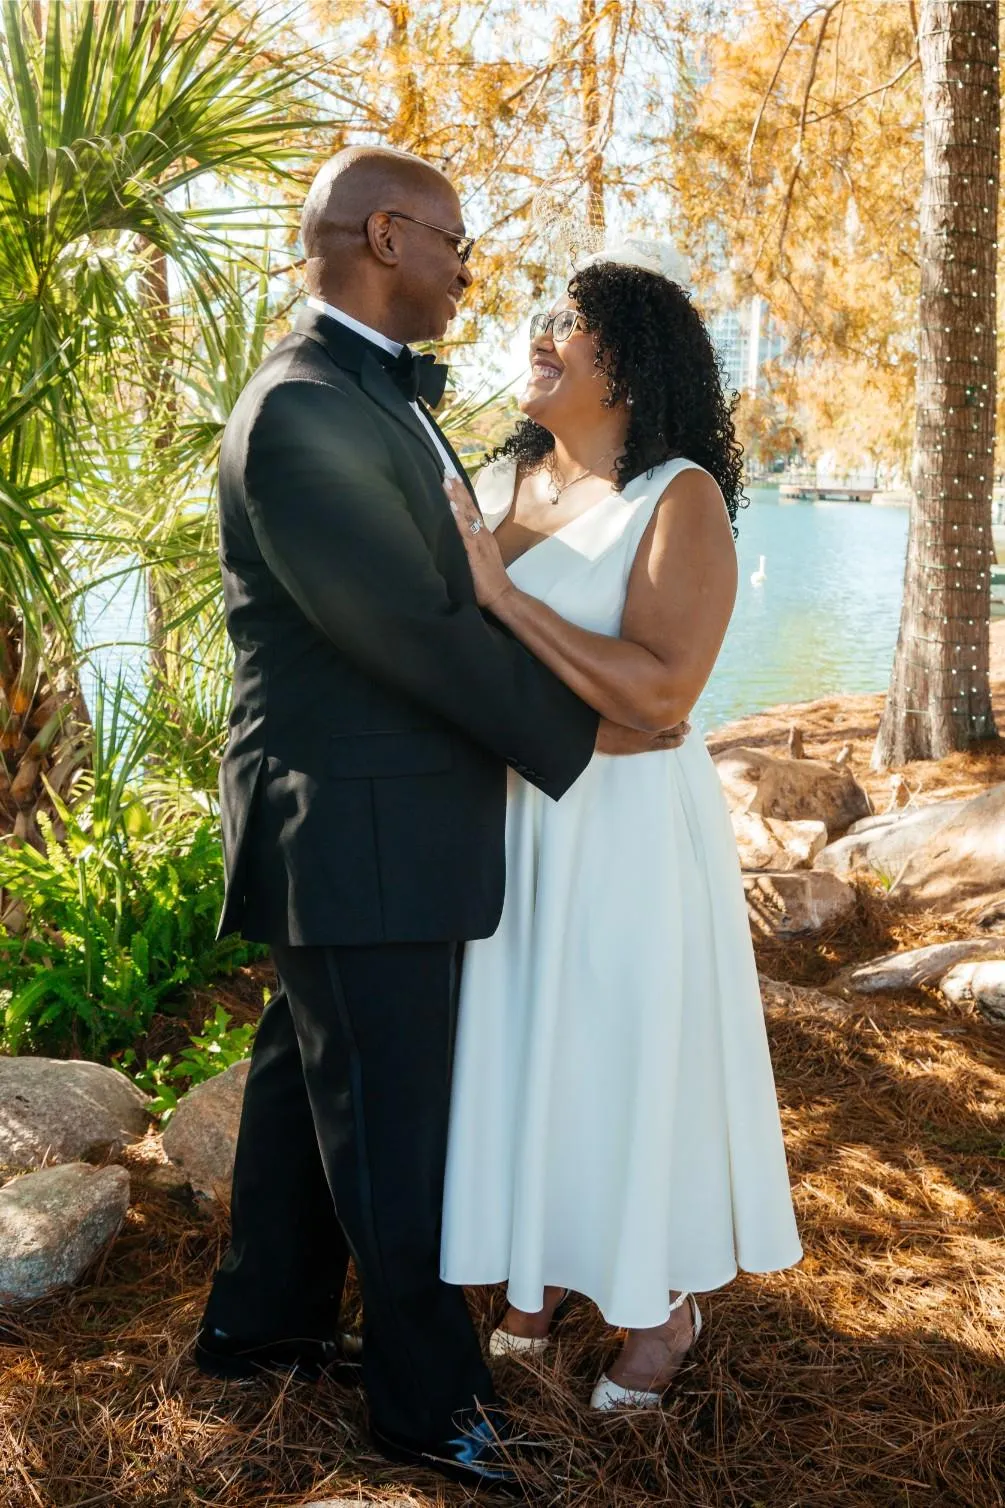 Bride and groom share a tender gaze, creating a memorable wedding photo at Lake Eola Park